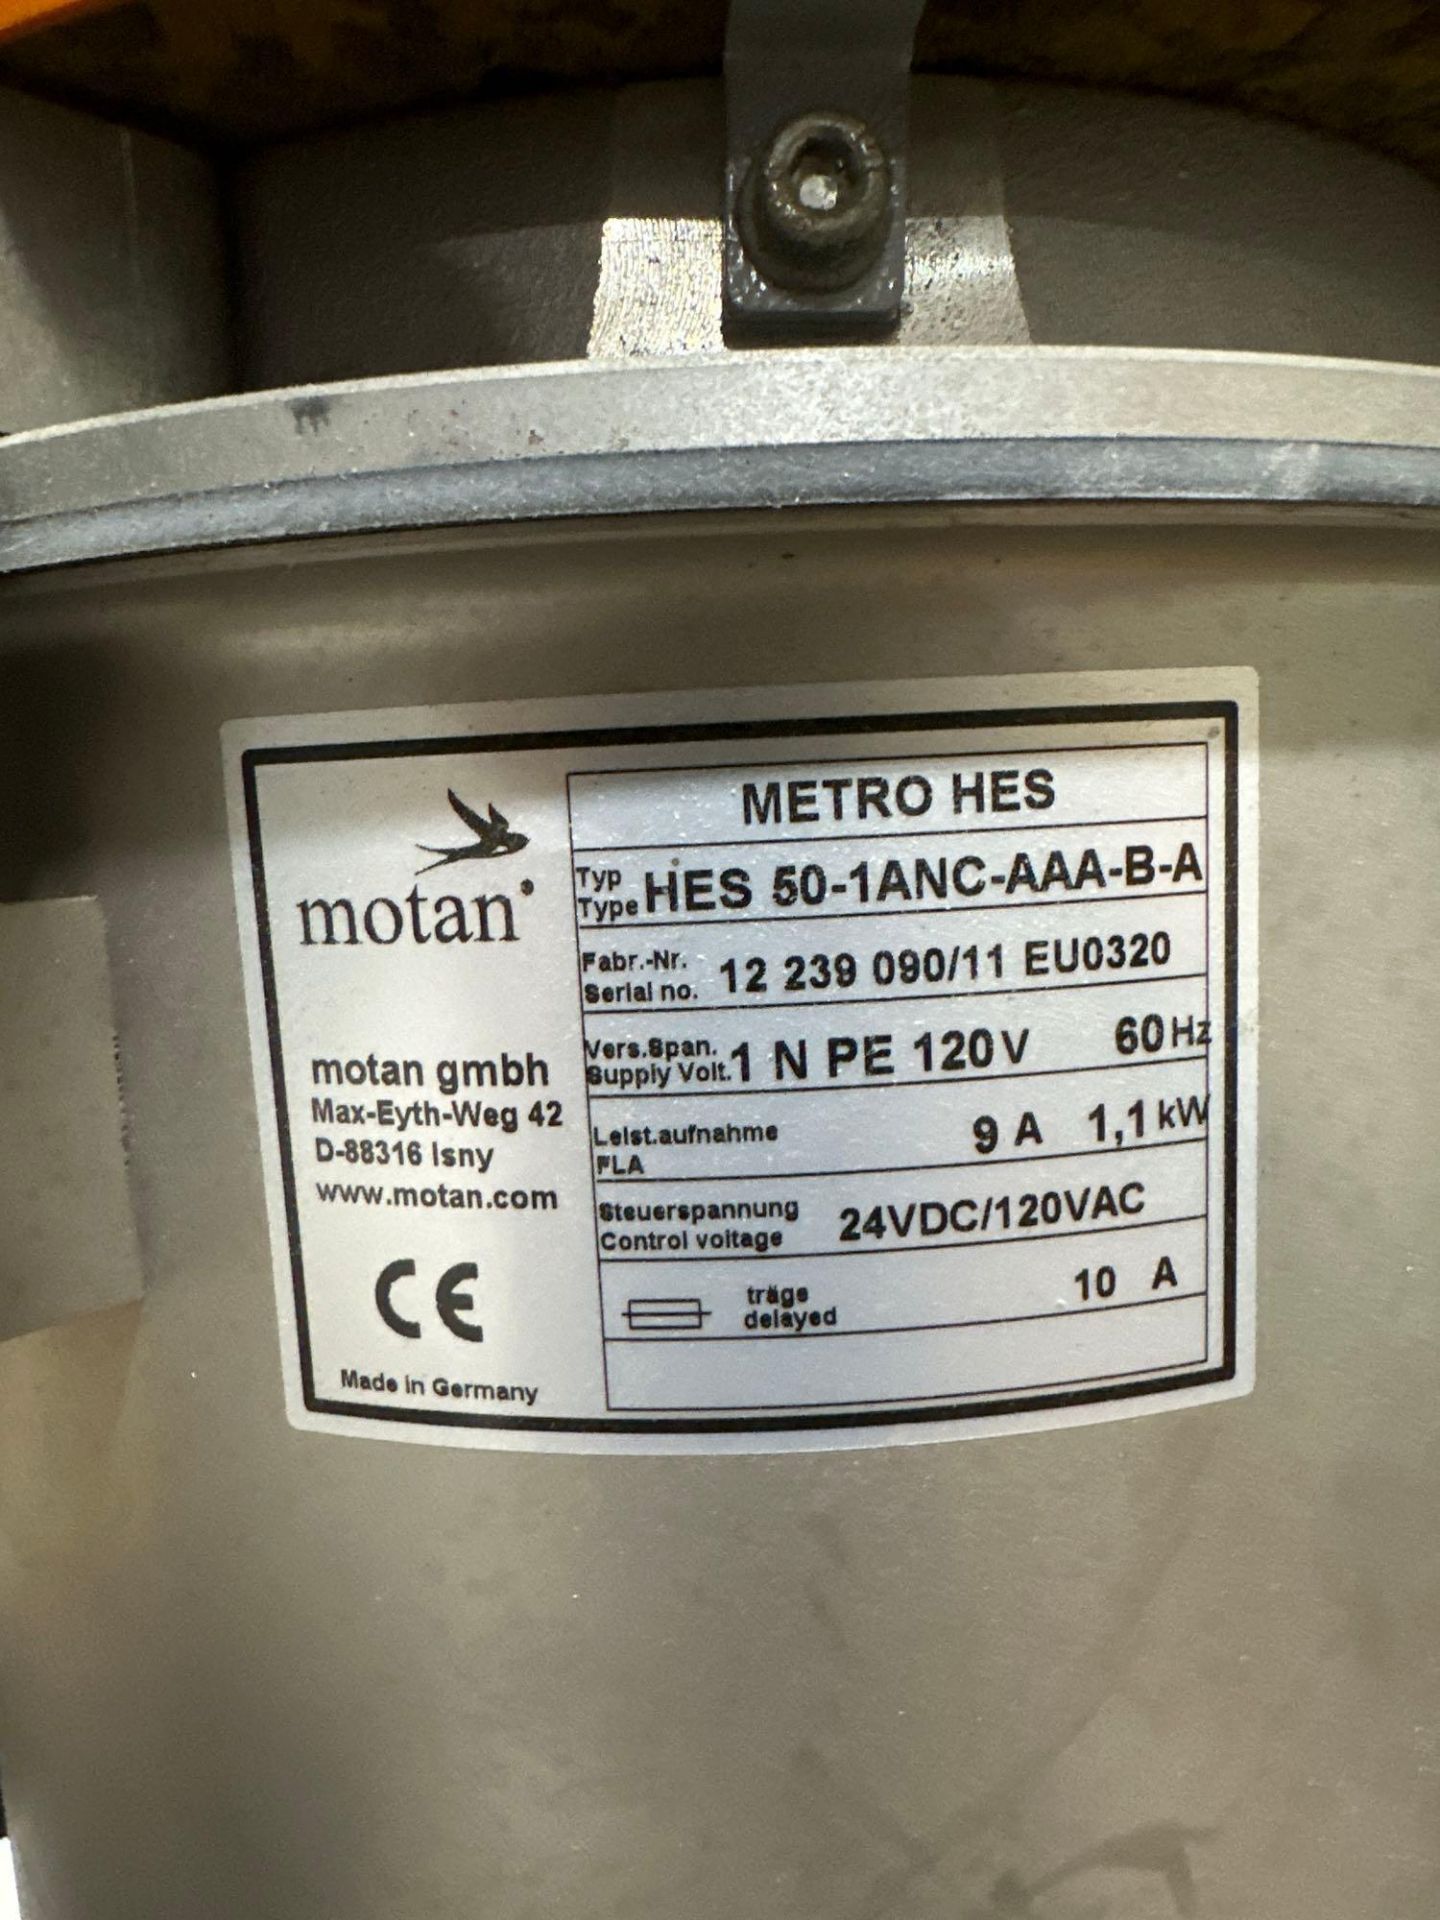 Motan Metro HES 50 Resin Vacuum Loader, 110V, s/n 12 239 090/11 EU0320 - Image 4 of 4